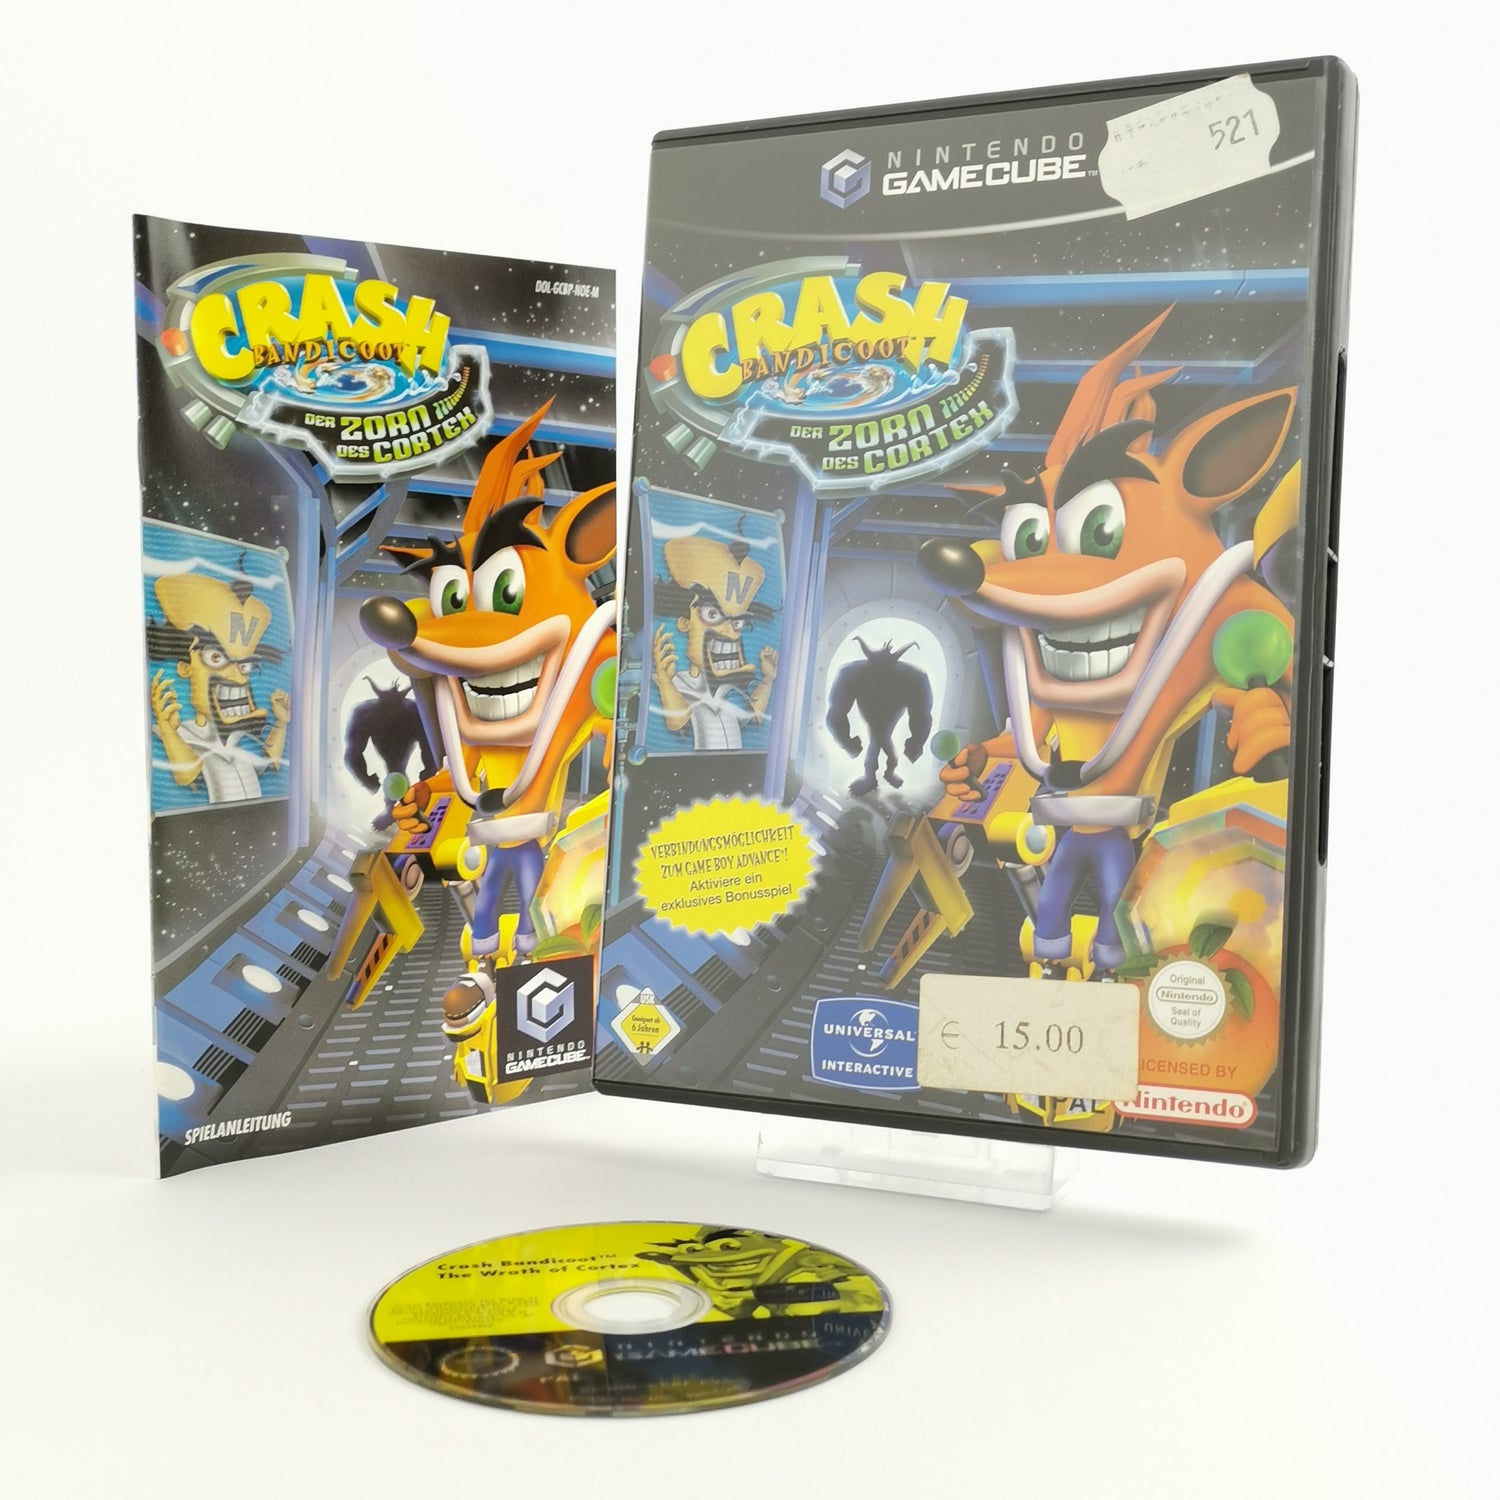 Nintendo Gamecube Game: Crash Bandicoot The Wrath of Cortex | German PAL - original packaging